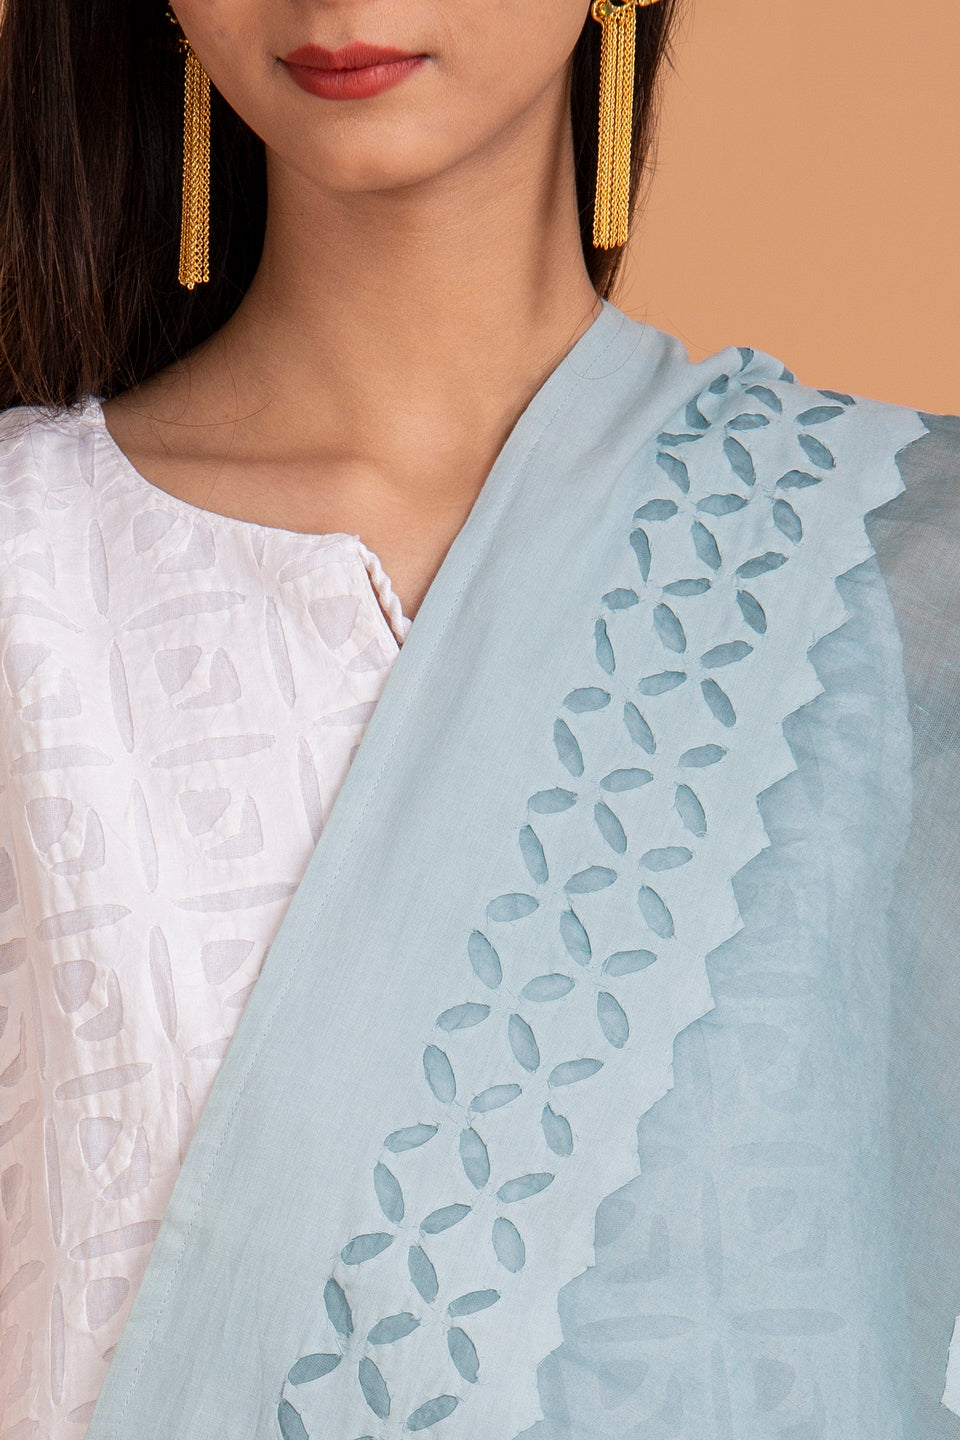 Duppatta Floral Diamond Applique Cotton with Khuddi Design Border, Grey